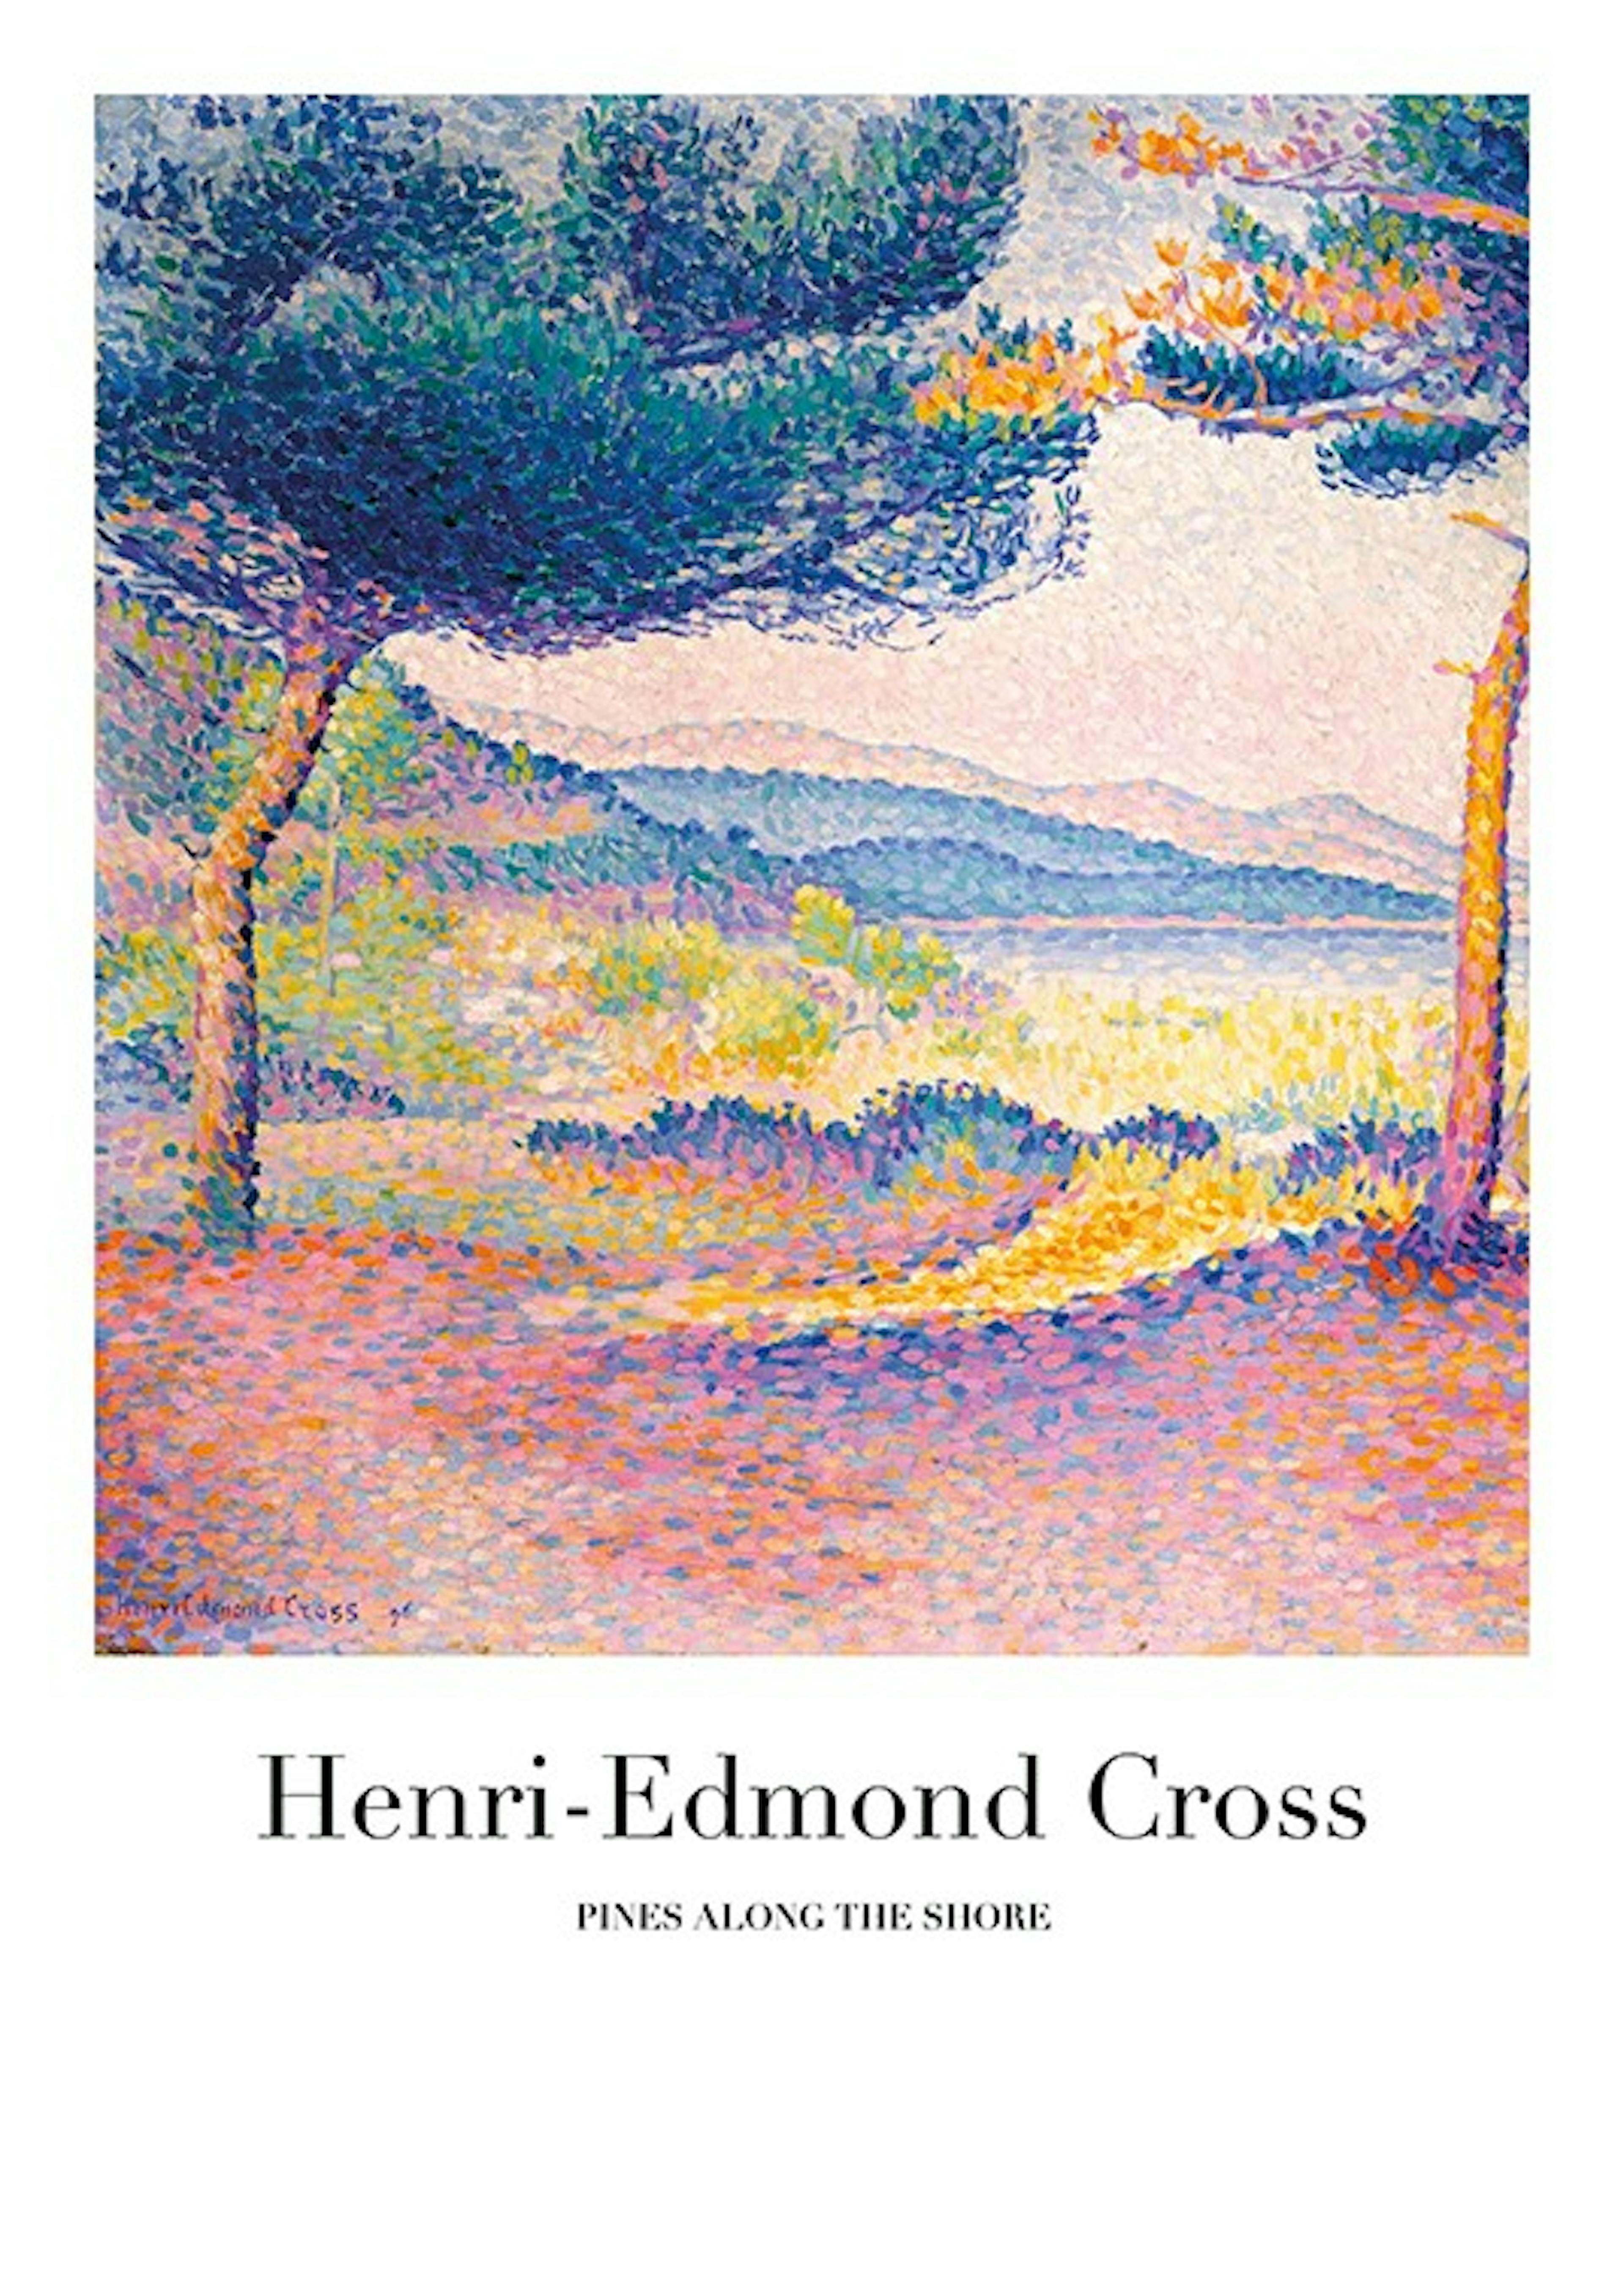 Henri-Edmond Cross - Pines Along the Shore Poster 0